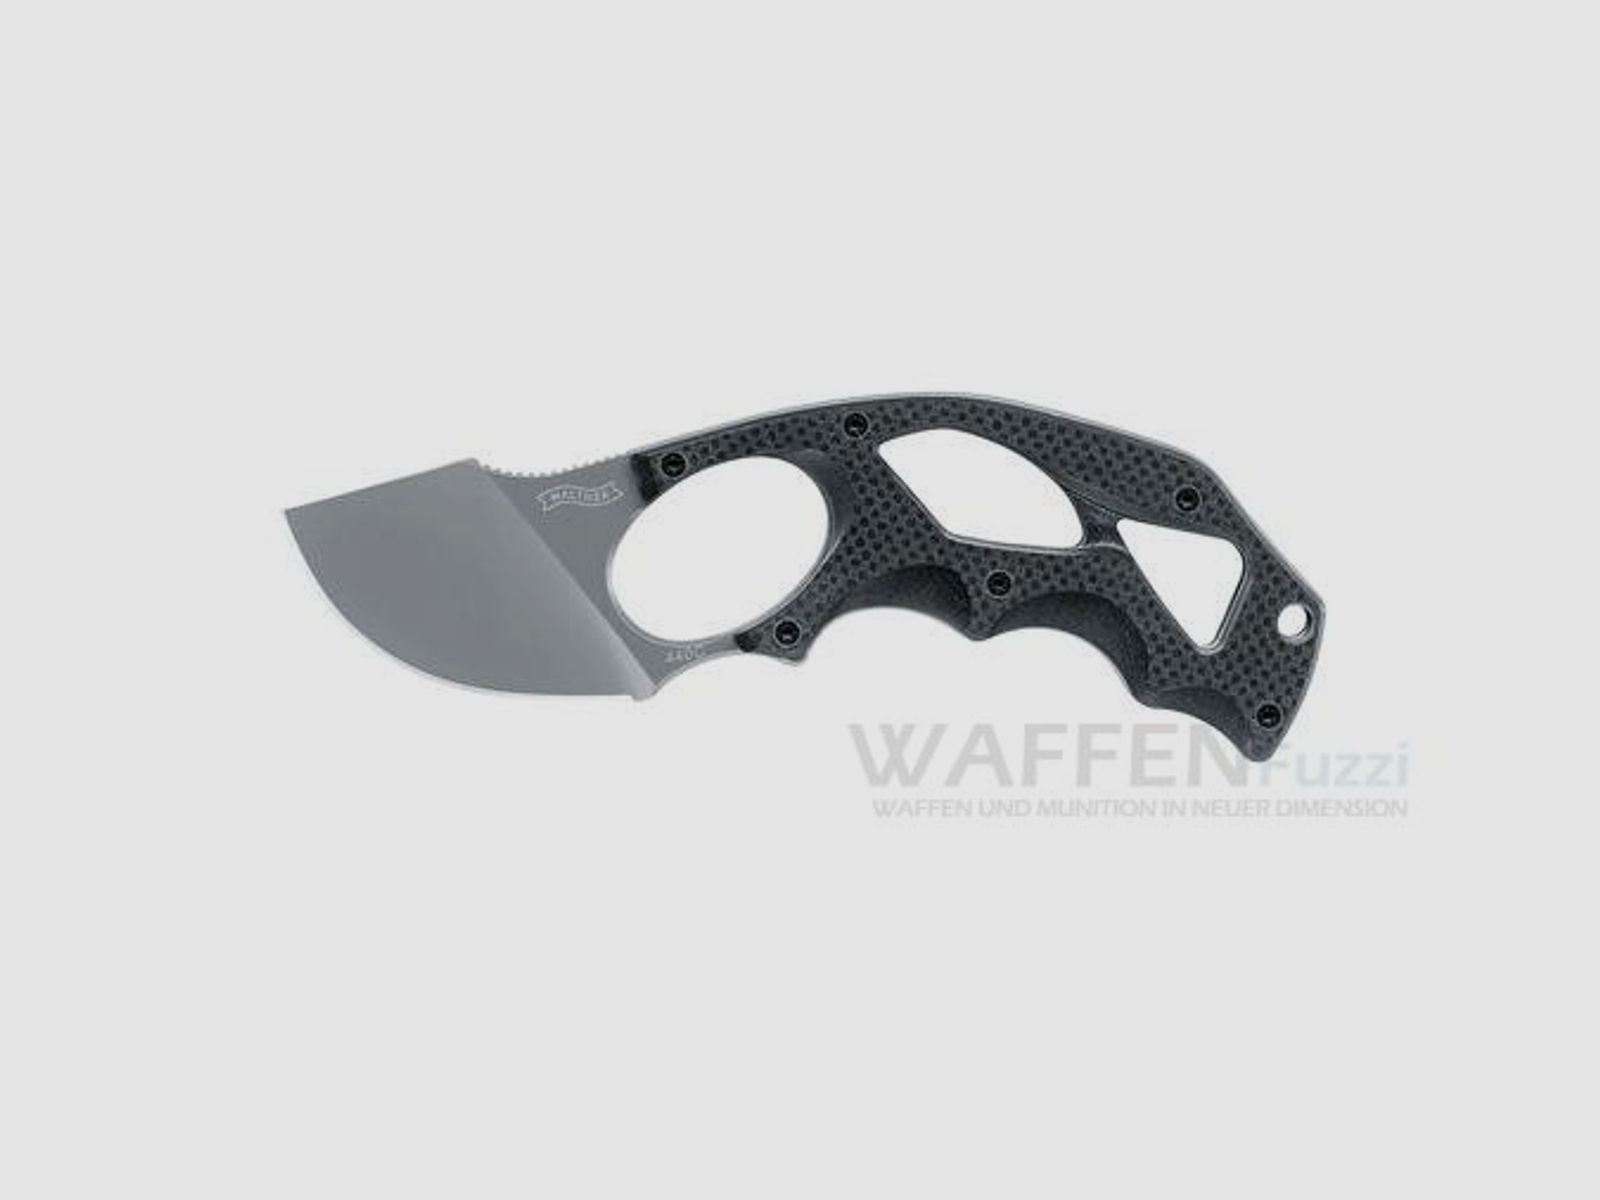 Walther TSK - Tactical Skinner Knife 440C / G10